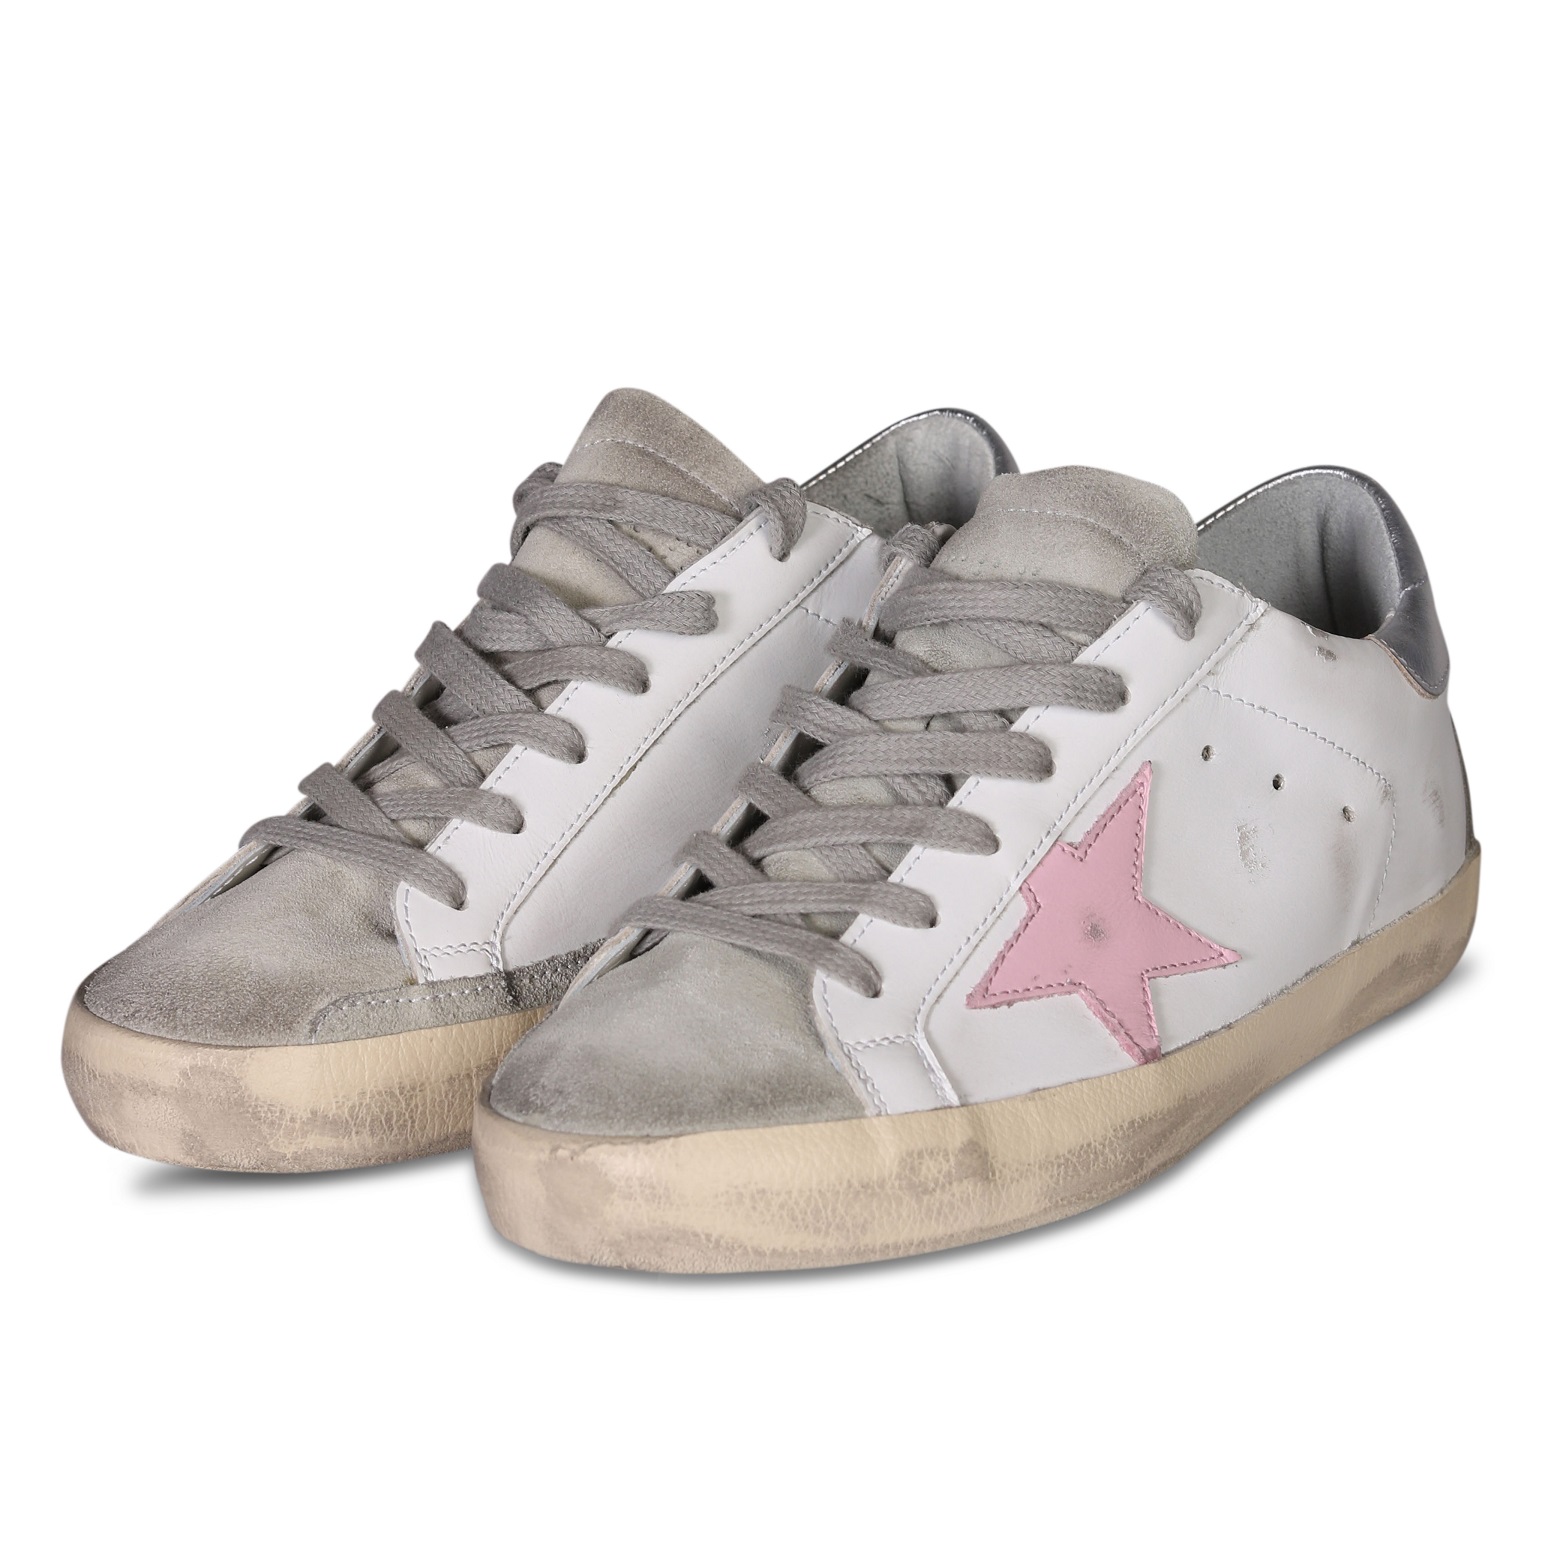 GOLDEN GOOSE Sneaker Super-Sta in White/Pink 37